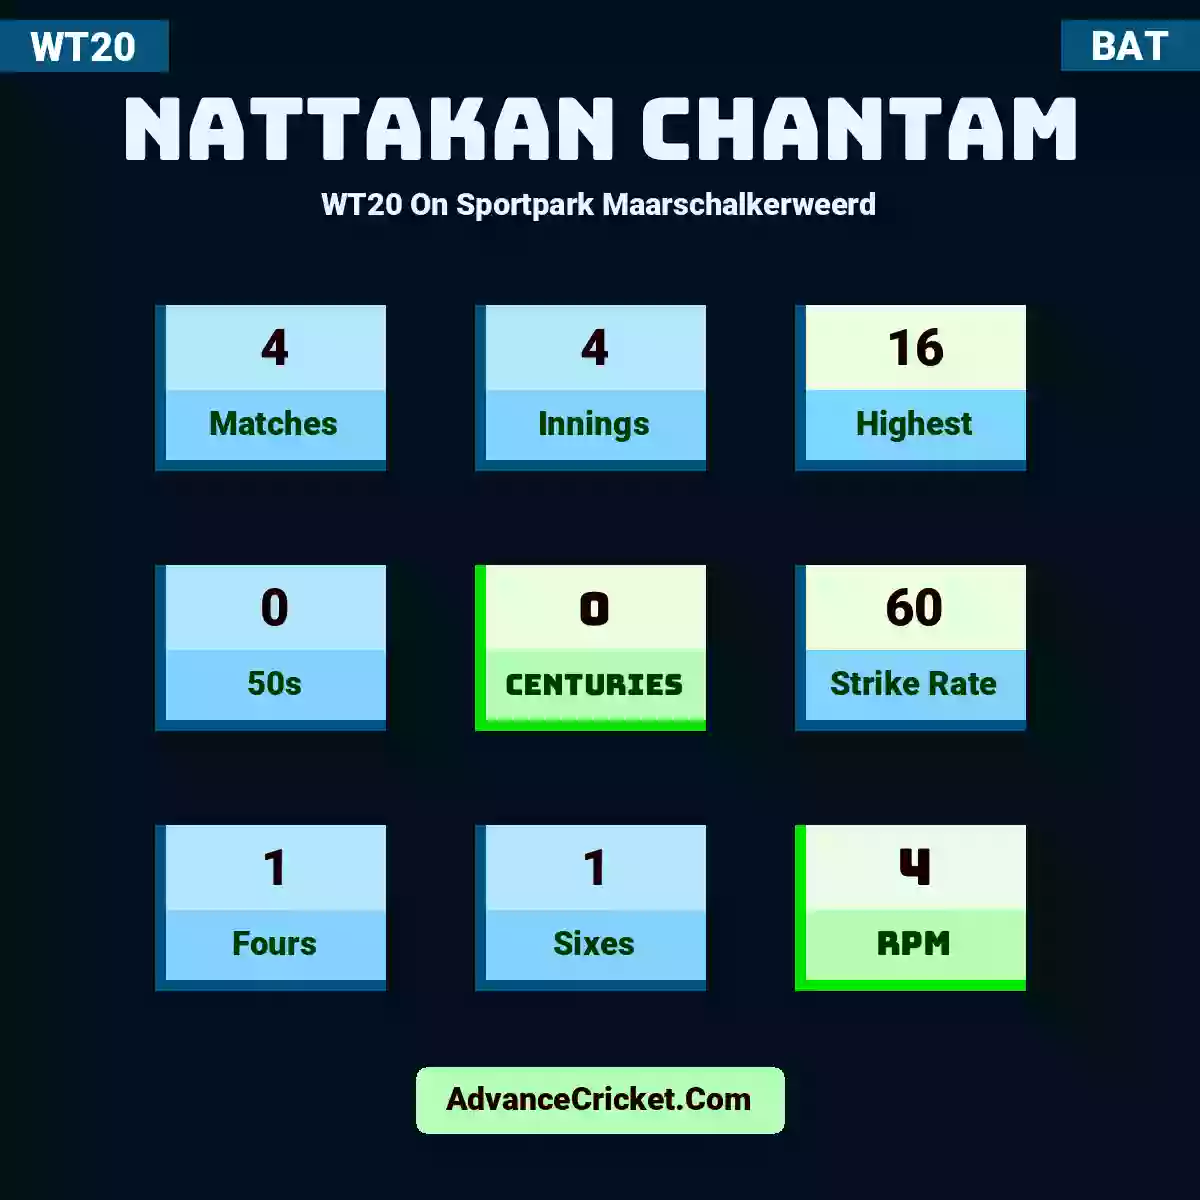 Nattakan Chantam WT20  On Sportpark Maarschalkerweerd, Nattakan Chantam played 4 matches, scored 16 runs as highest, 0 half-centuries, and 0 centuries, with a strike rate of 60. N.Chantam hit 1 fours and 1 sixes, with an RPM of 4.